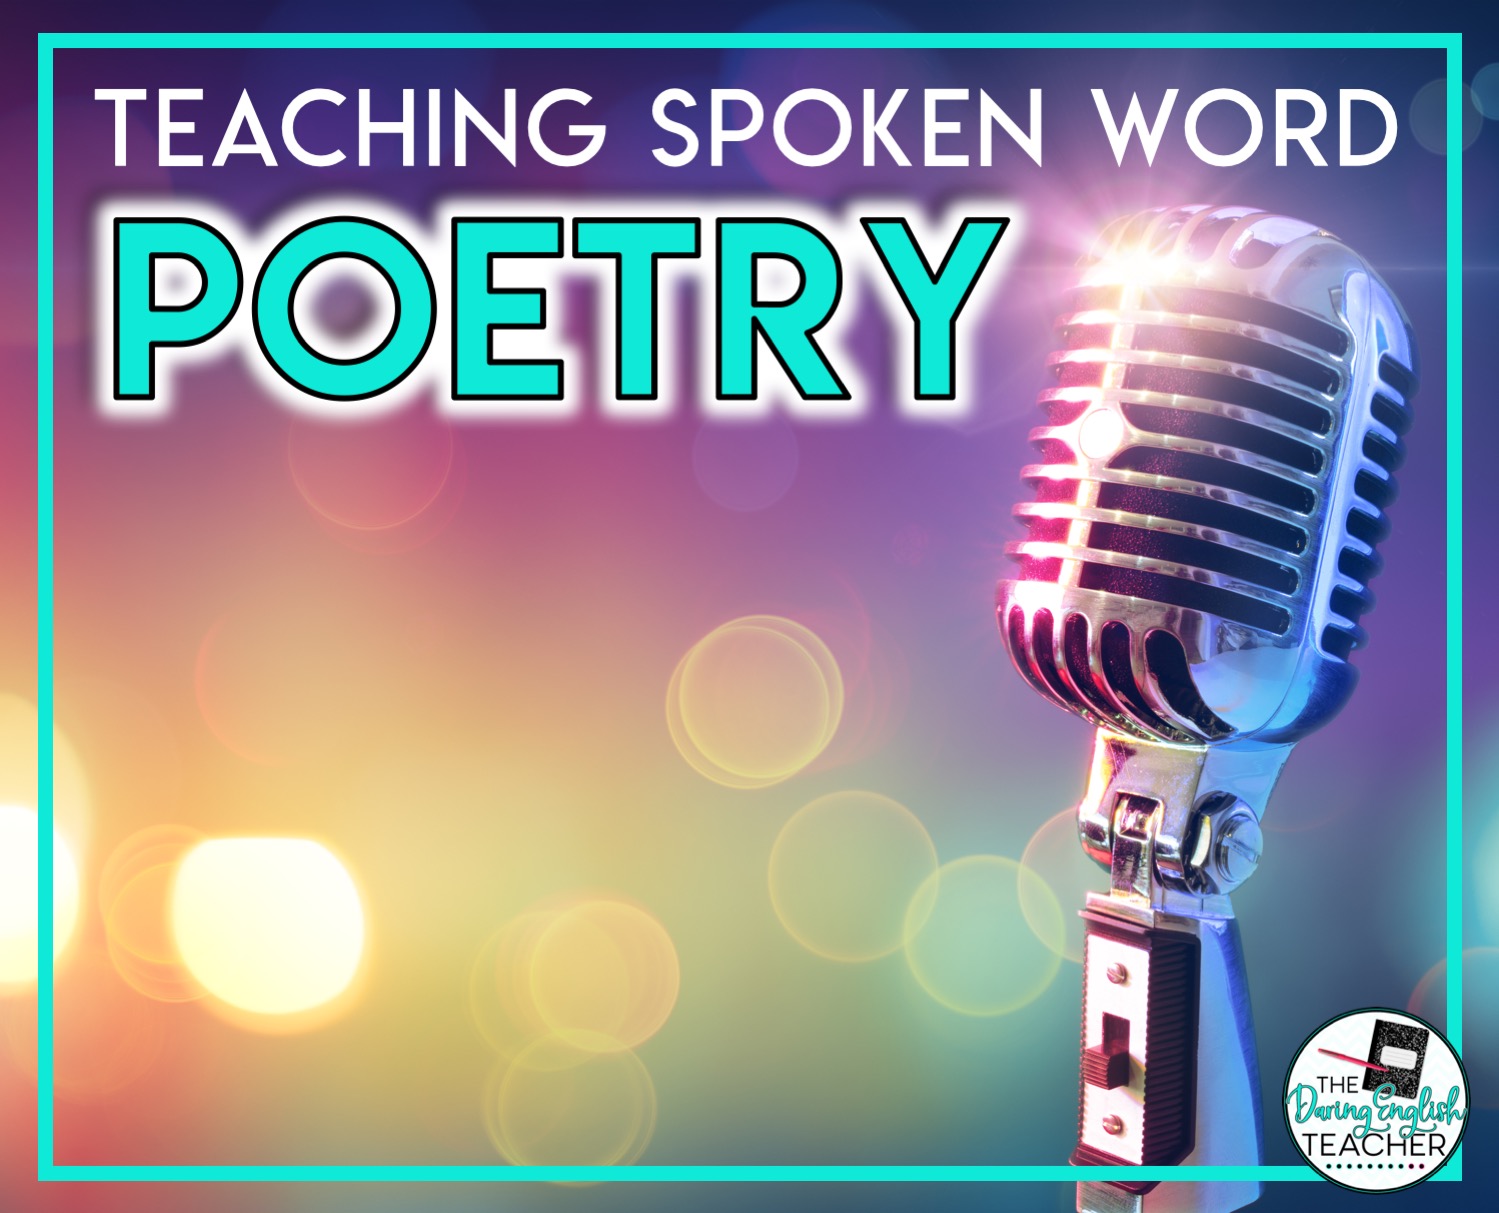 Teaching Spoken Word Poetry in the Classroom